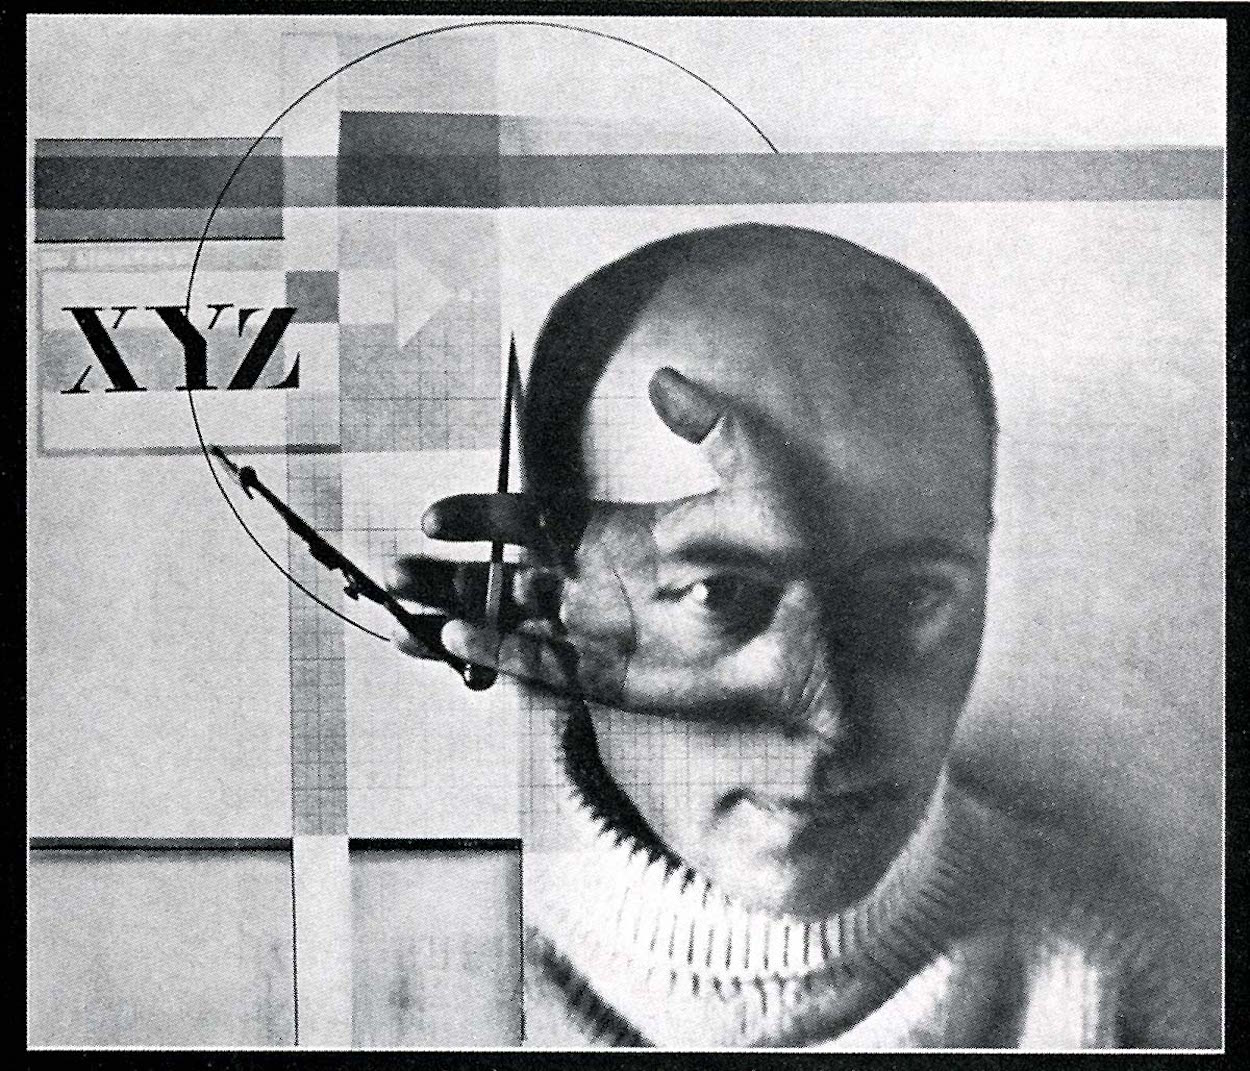 El Lissitzky - November 23, 1890 - December 30, 1941